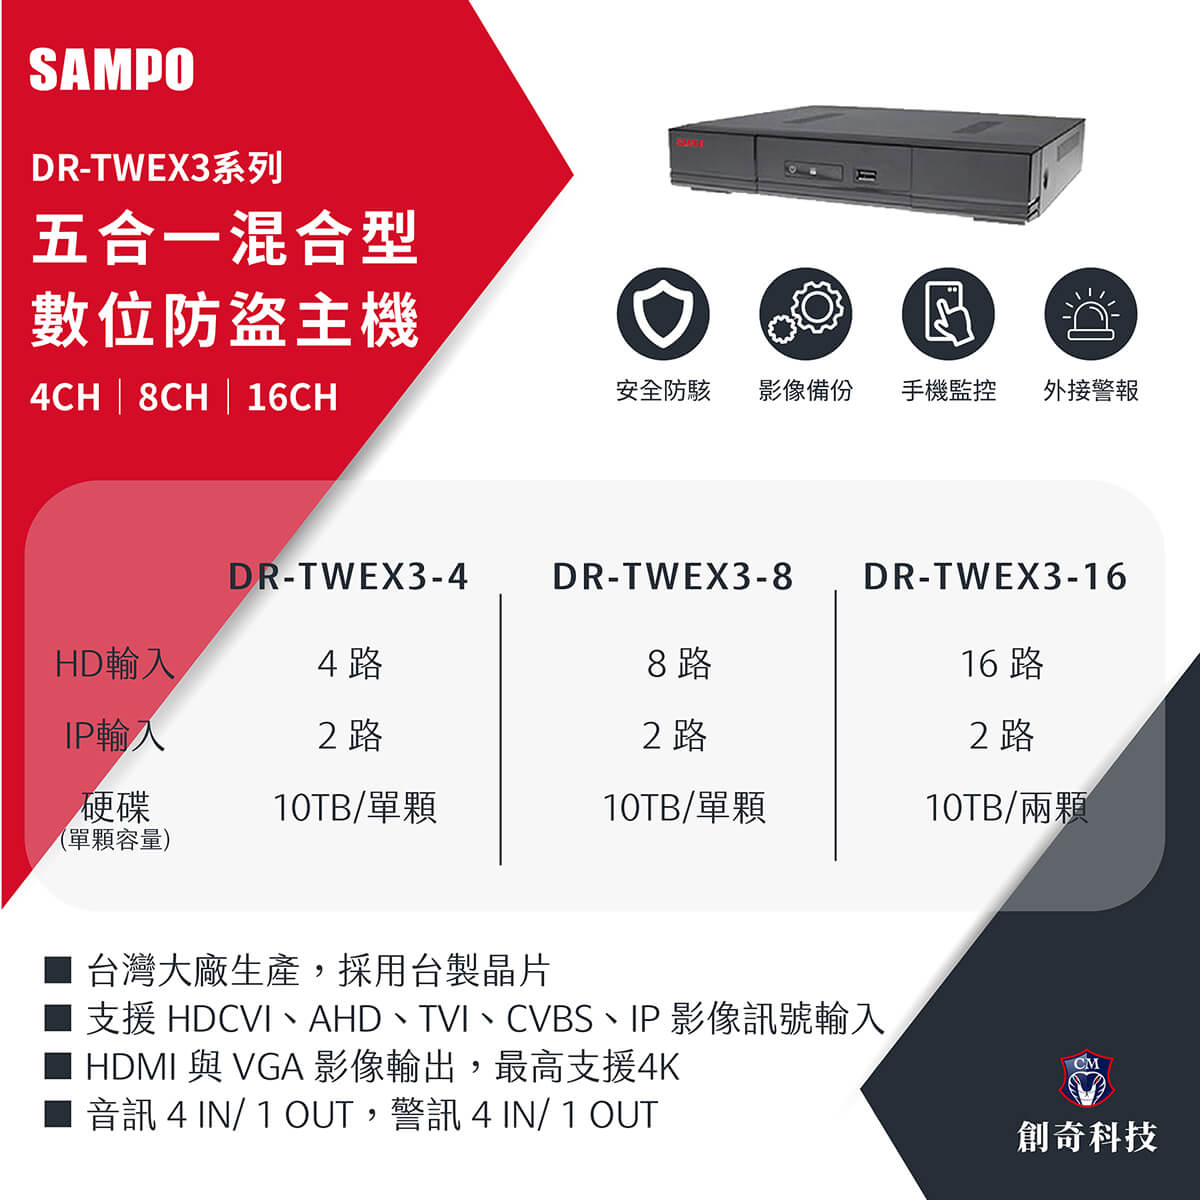 SAMPO DR-TWEX3系列 五合一混合型數位防盜主機 4CH | 8CH | 16CH